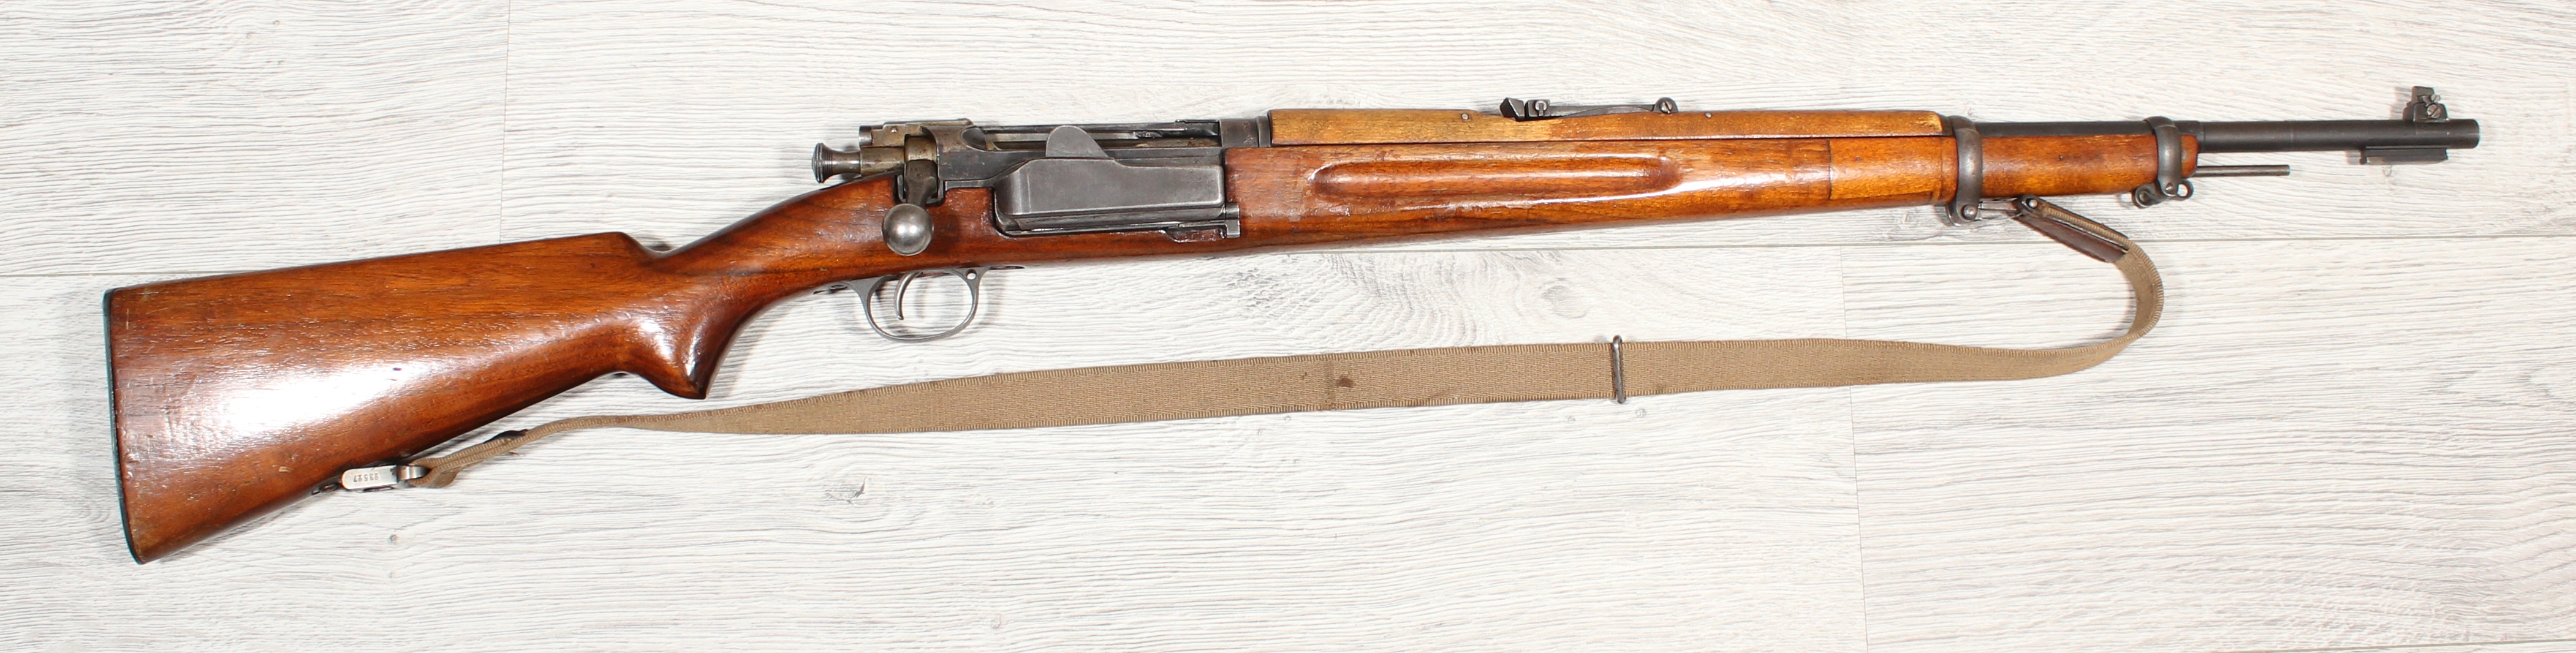 ./guns/rifle/bilder/Rifle-Kongsberg-Krag-M1894-Stomperud-54467-1.JPG